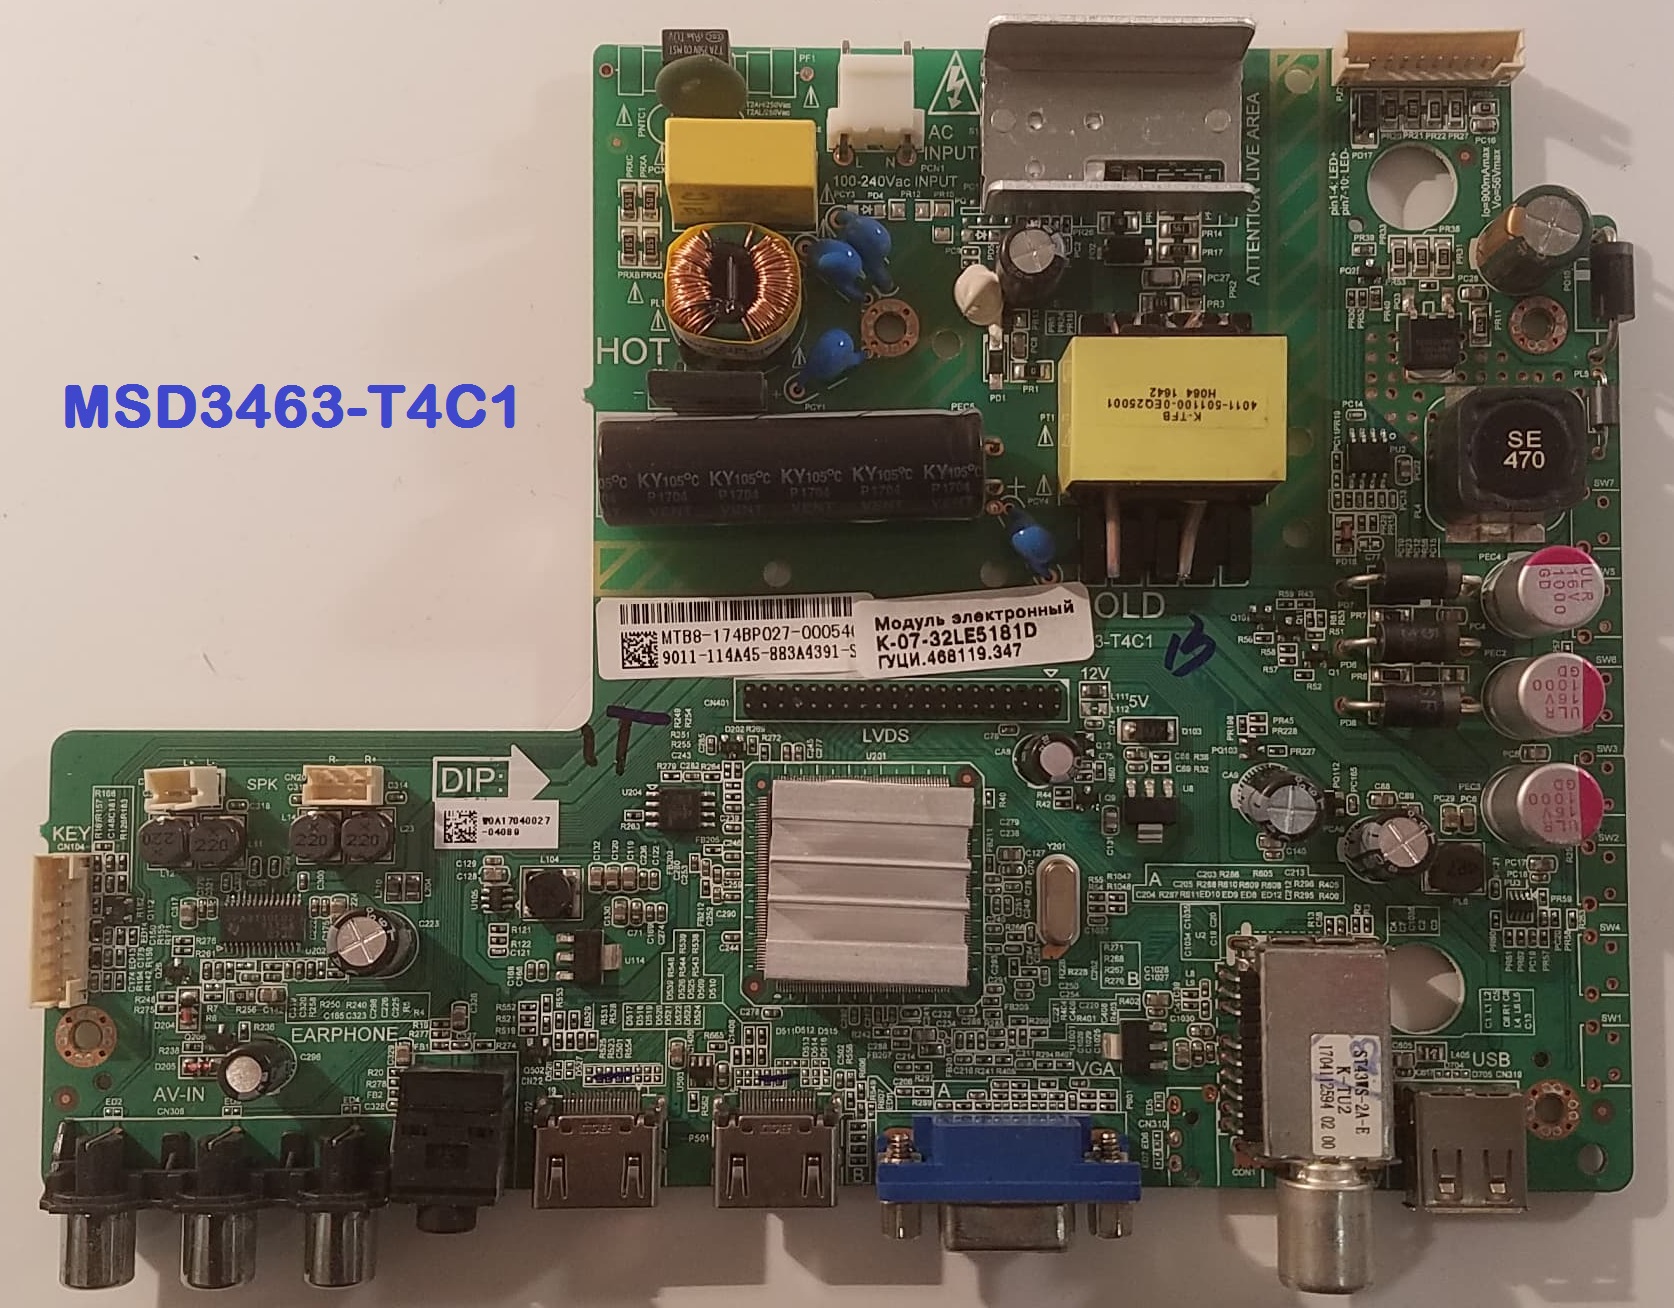 Msd3463-T4C1_Firmware